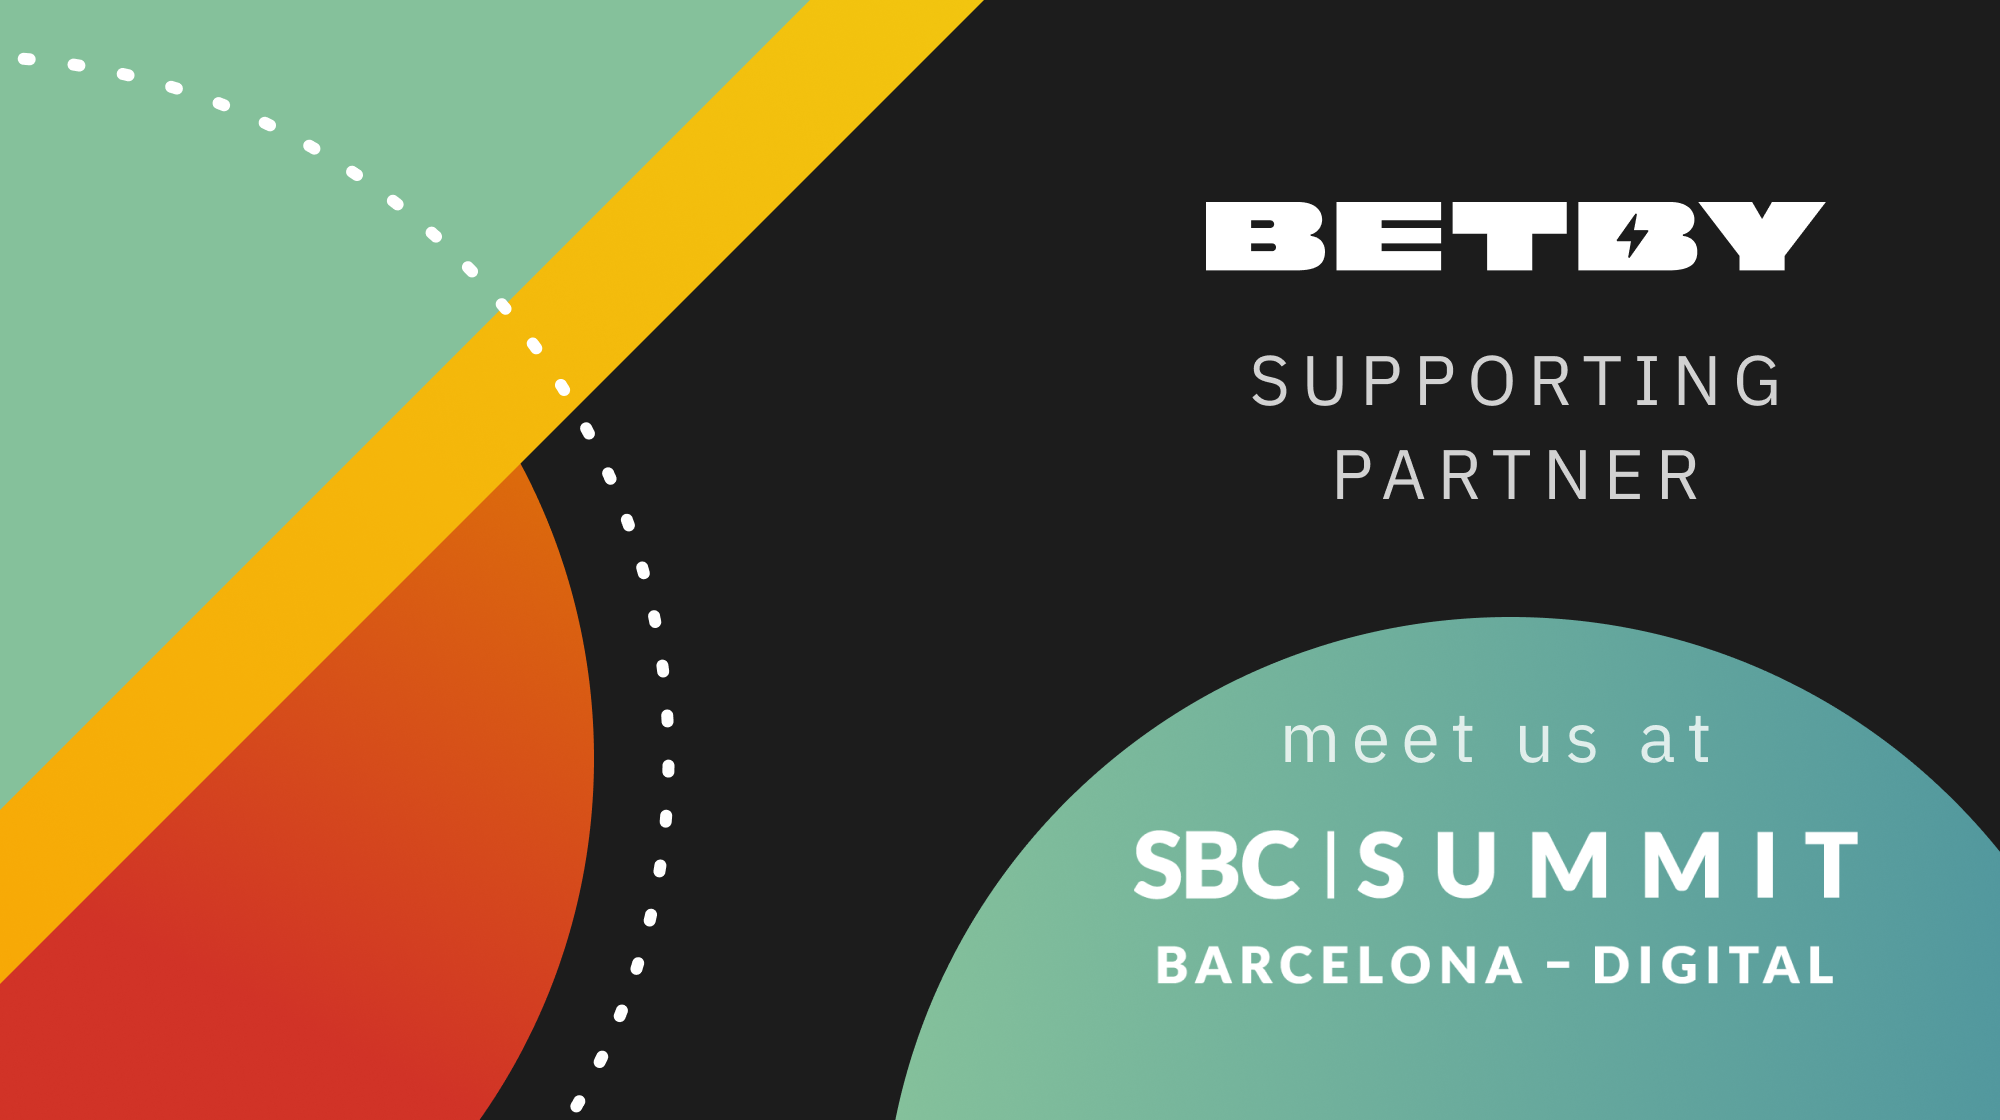 BETBY to sponsor SBC Barcelona Digital Summit